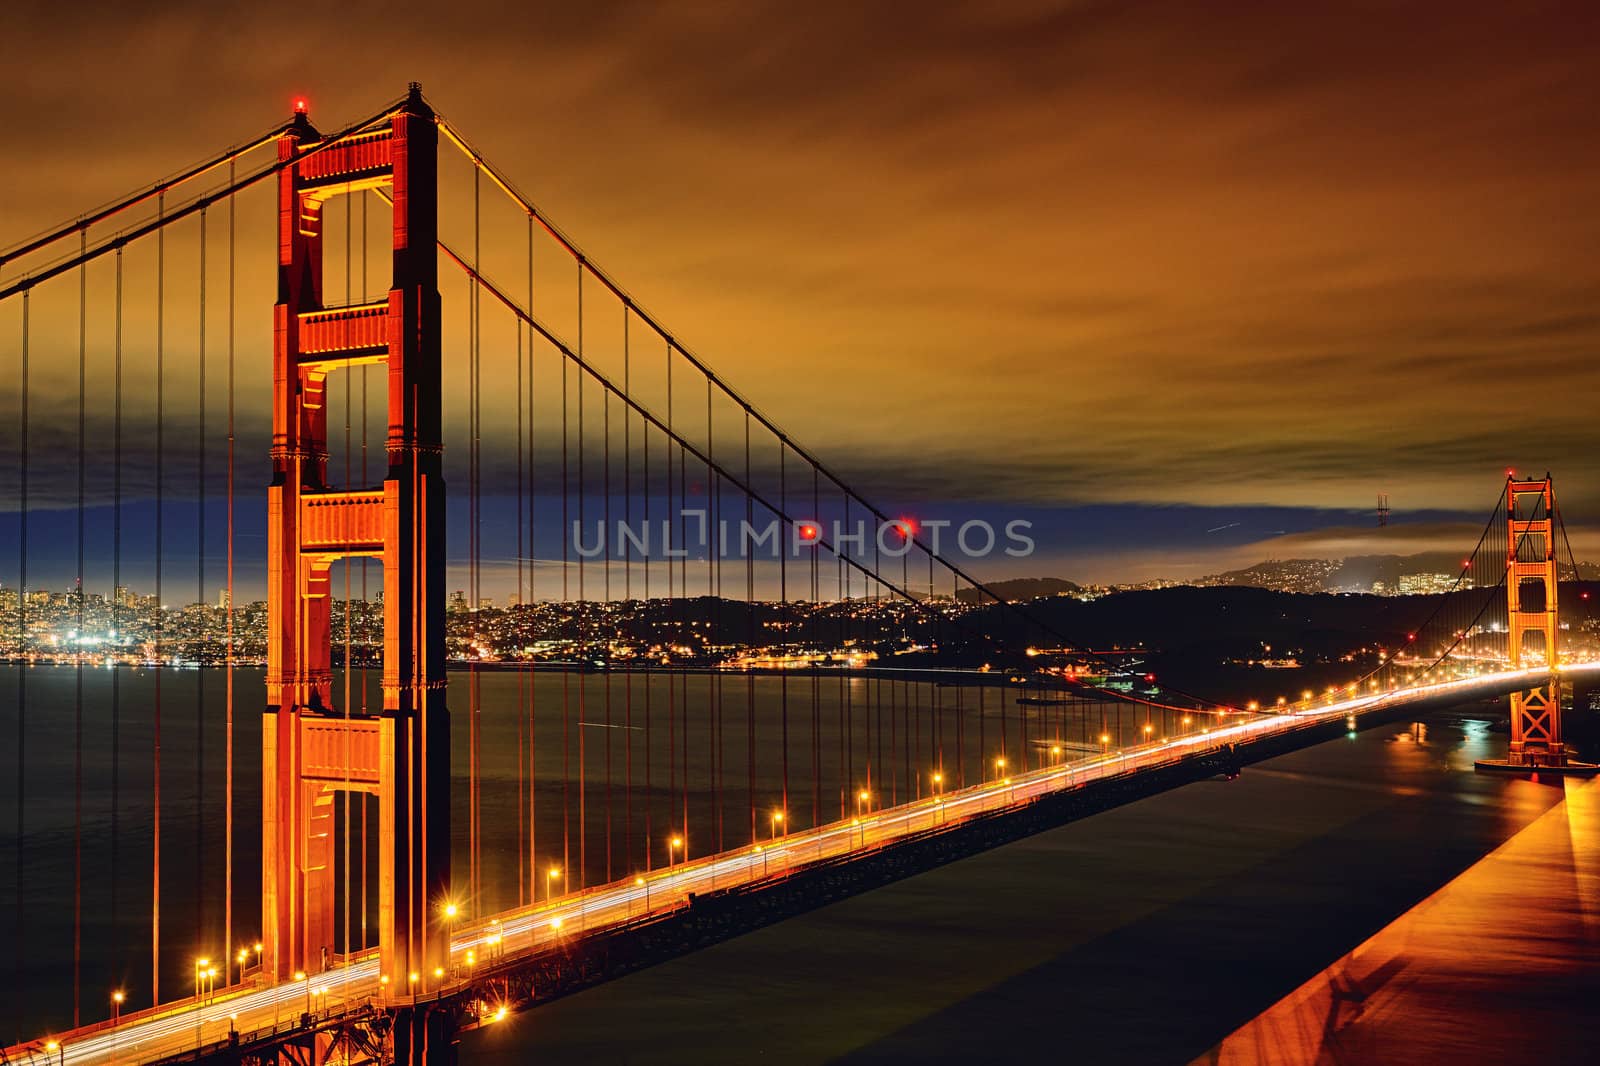 Night scene of Golden Gate Bridge and San Francisco lights